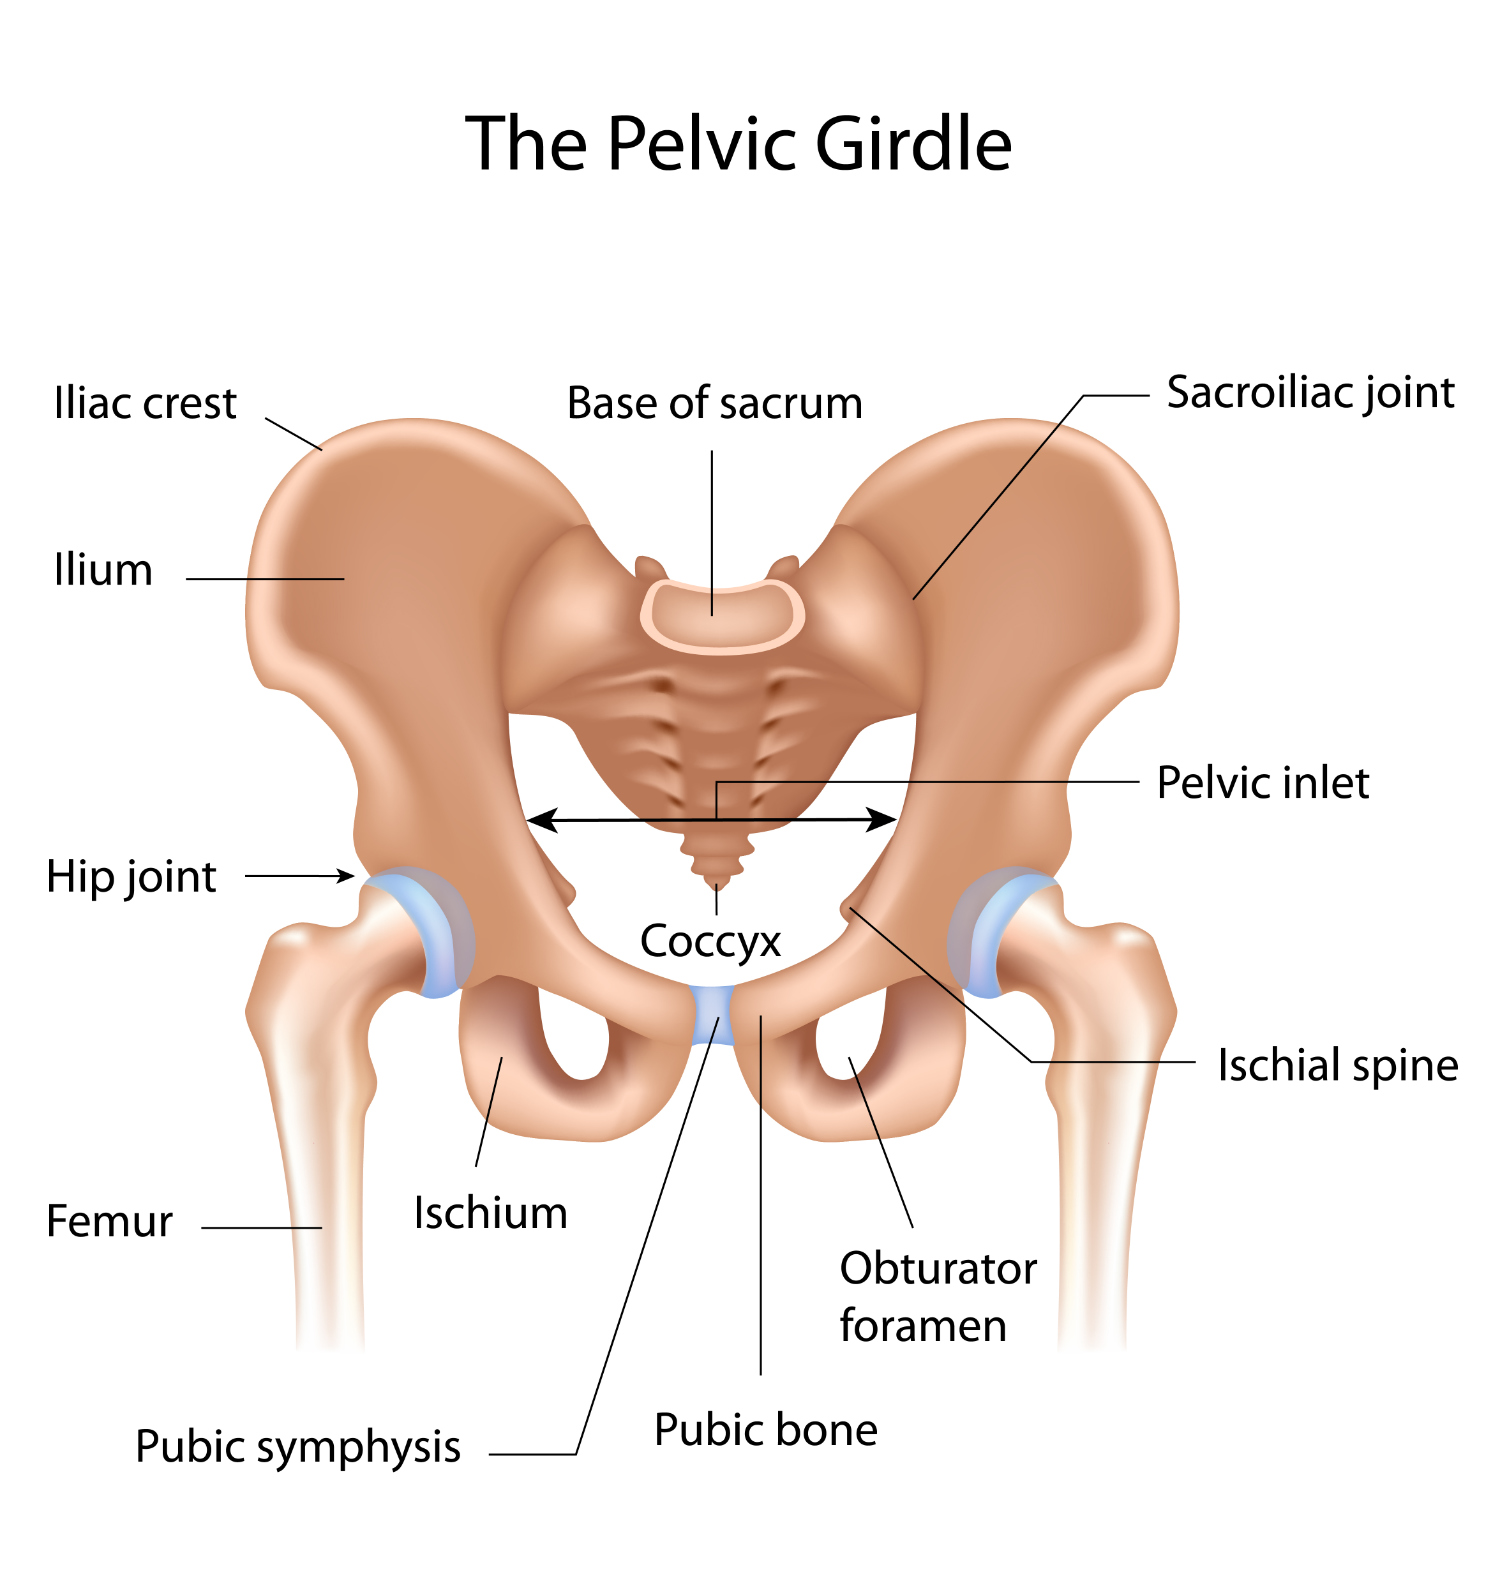 Why Do I Have Post-Partum Pelvic Girdle Pain?